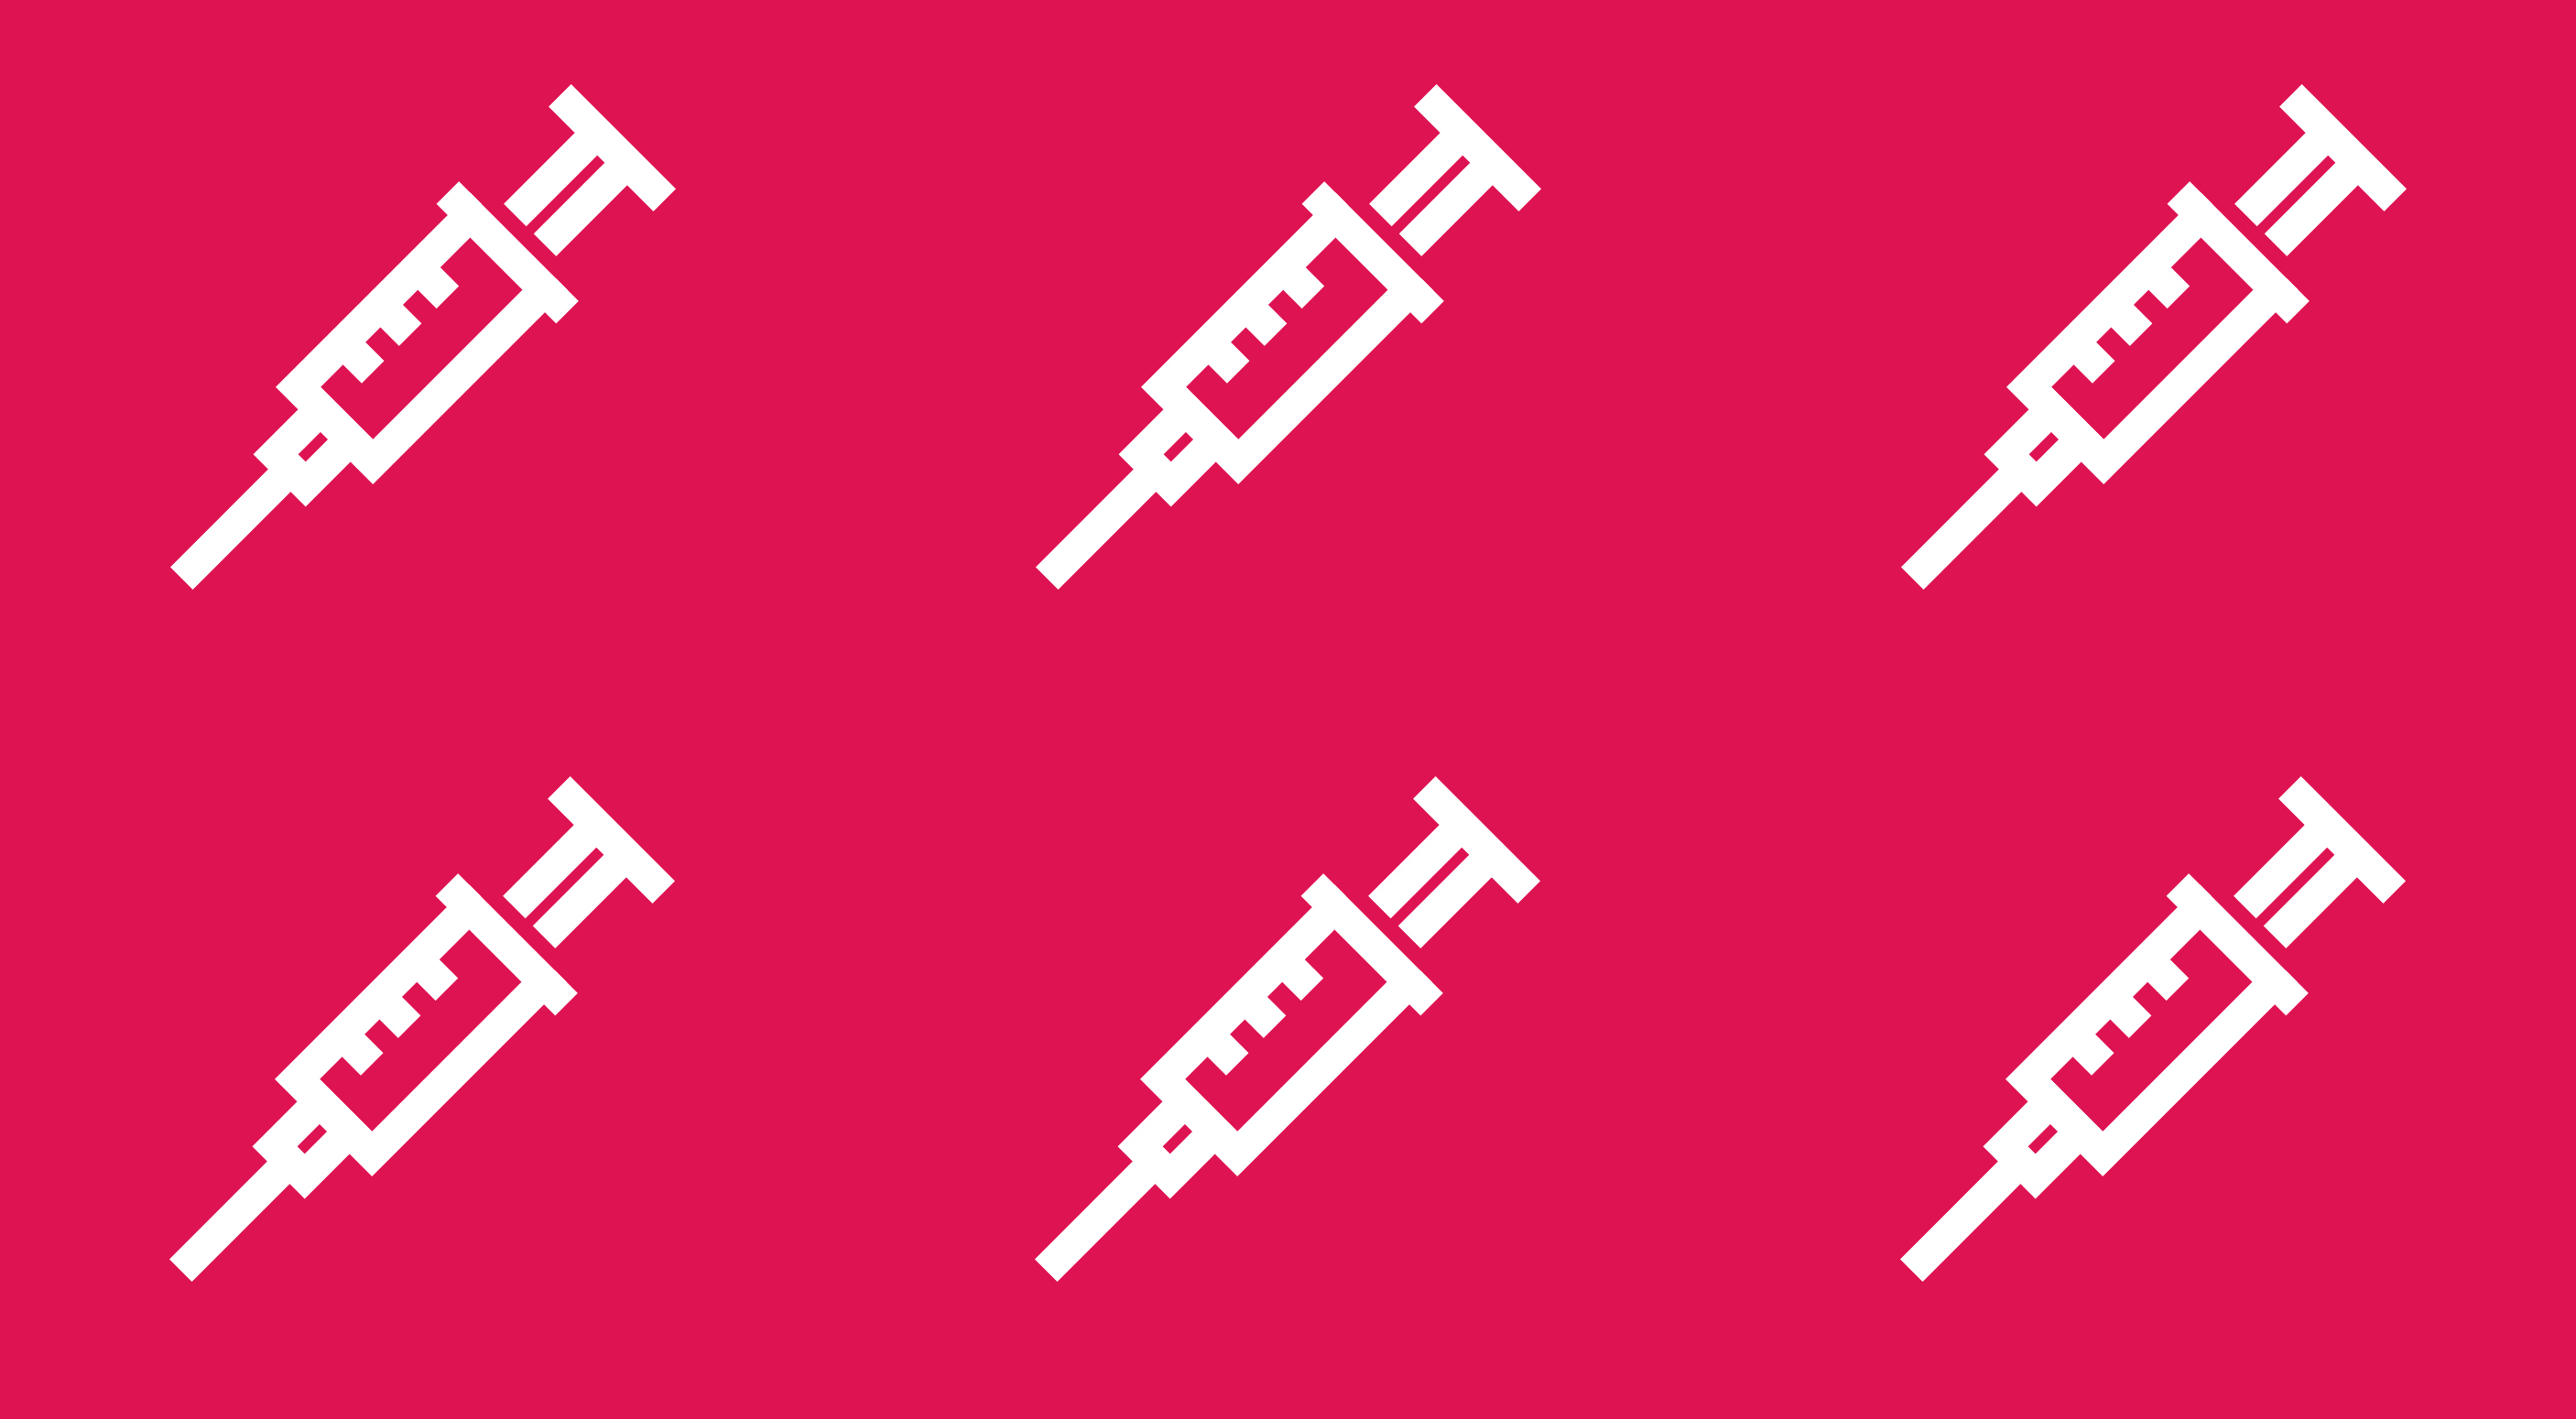 syringes on a hot pink background